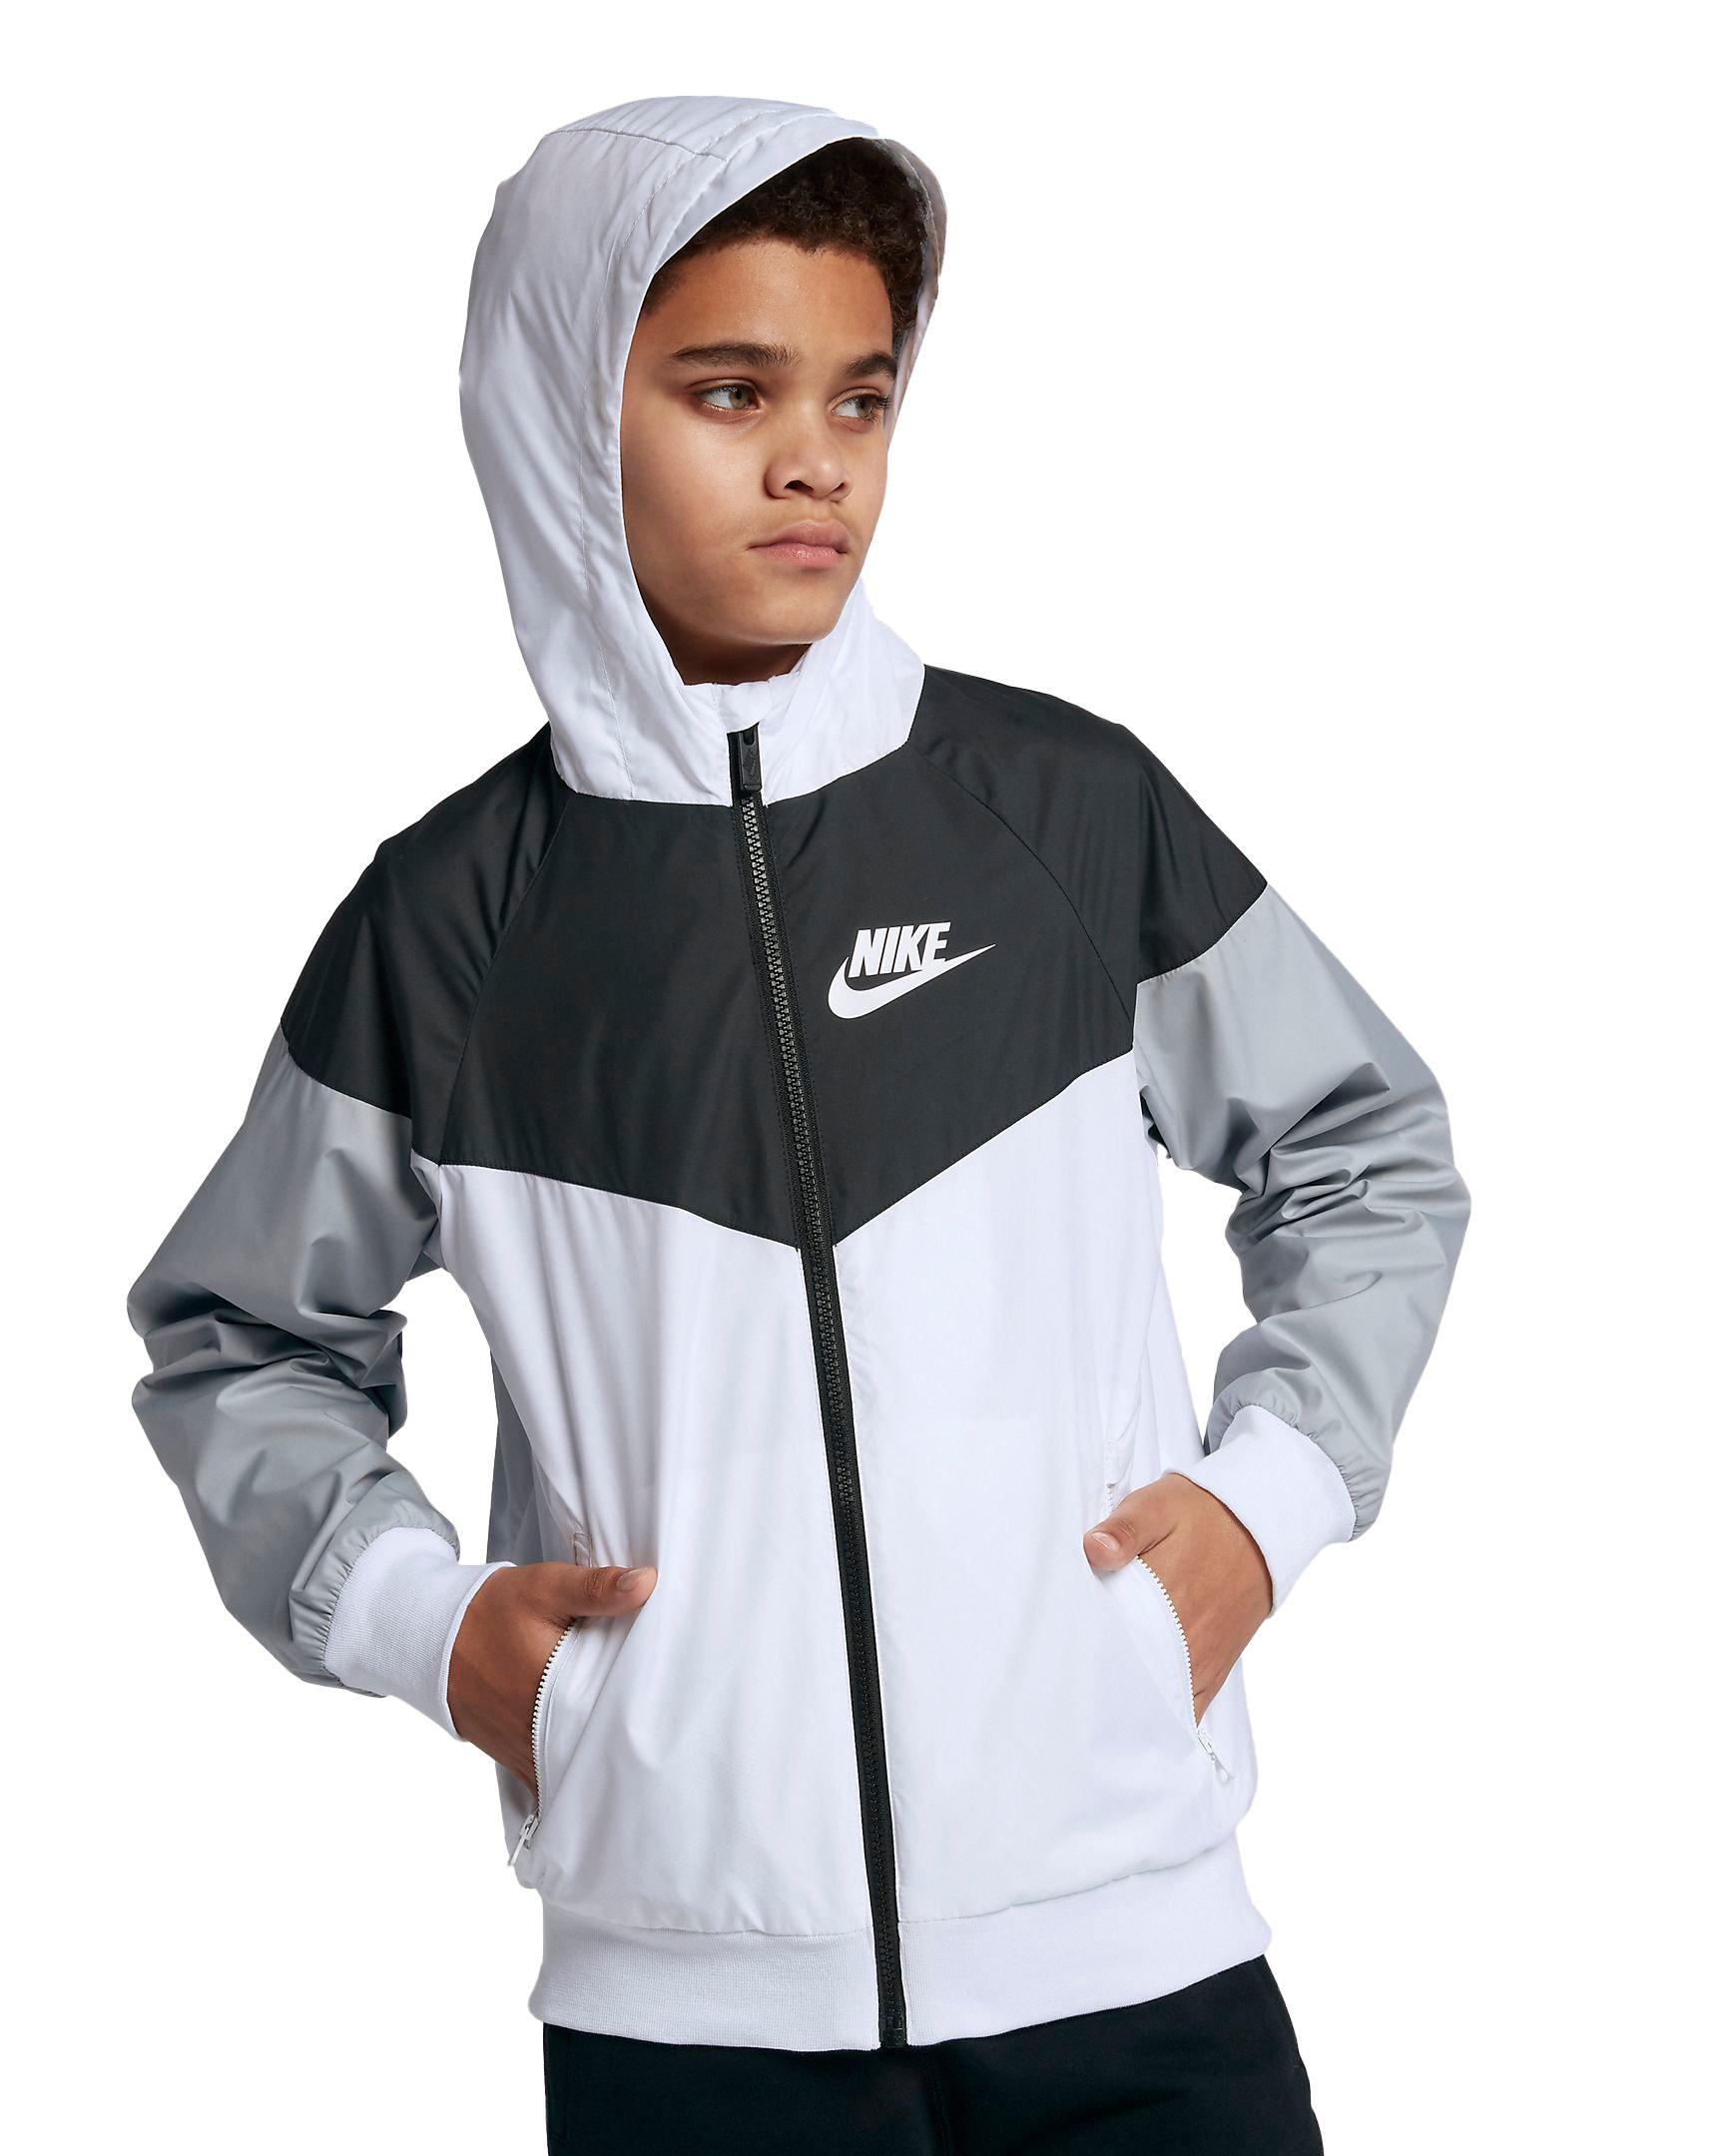 oficina postal Mariscos maceta Nike Sportswear Windrunner Big Boys' White/Black/Grey Jacket